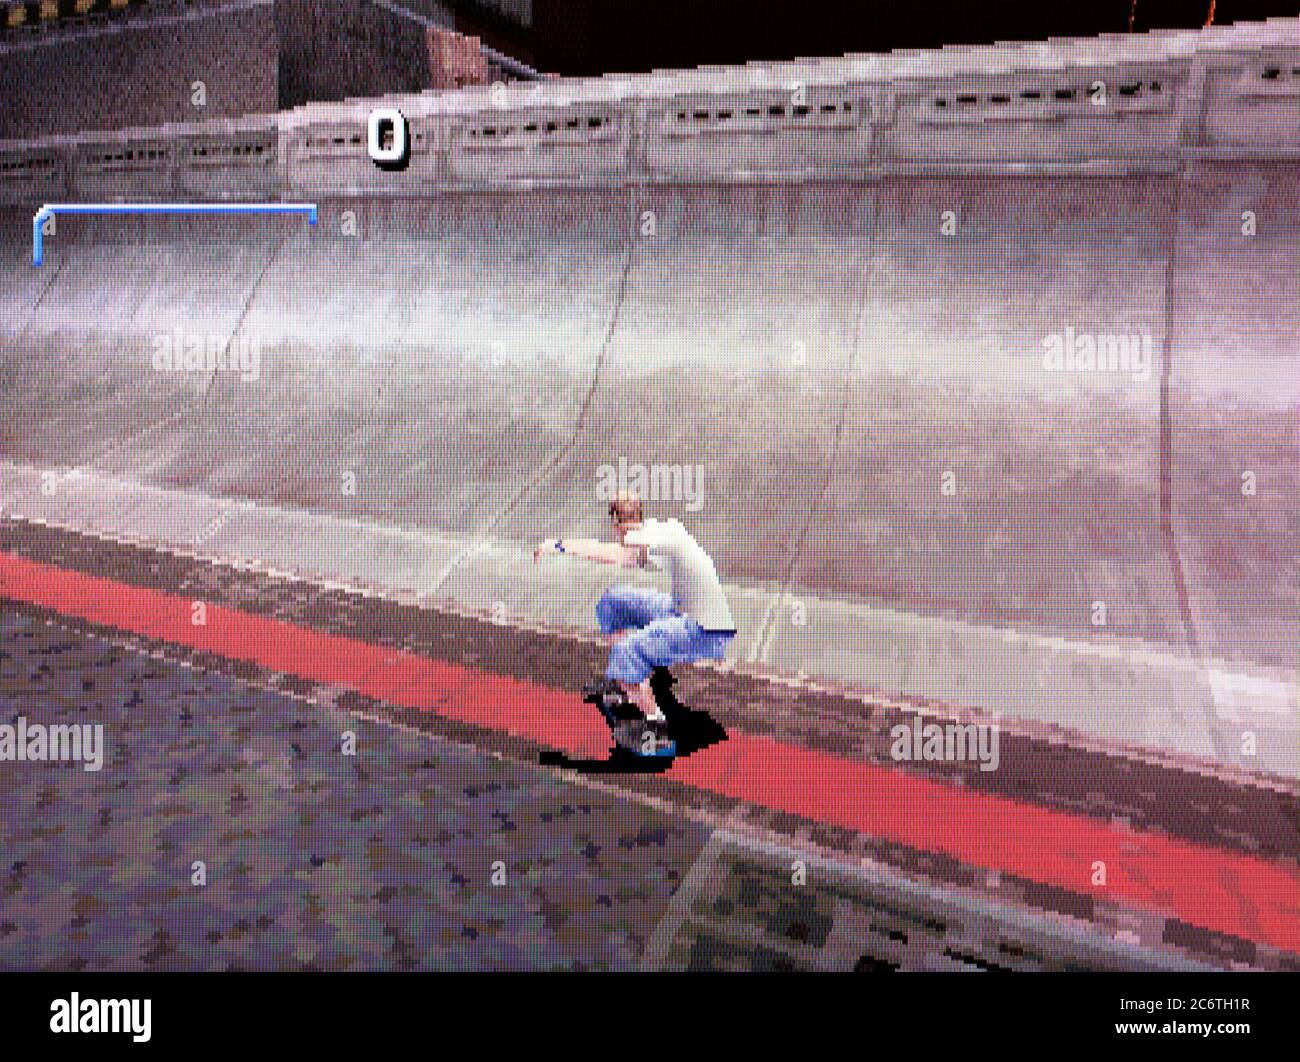 Tony Hawk's Pro Skater 3 - Sony Playstation 1 PS1 PSX - Editorial use only  Stock Photo - Alamy